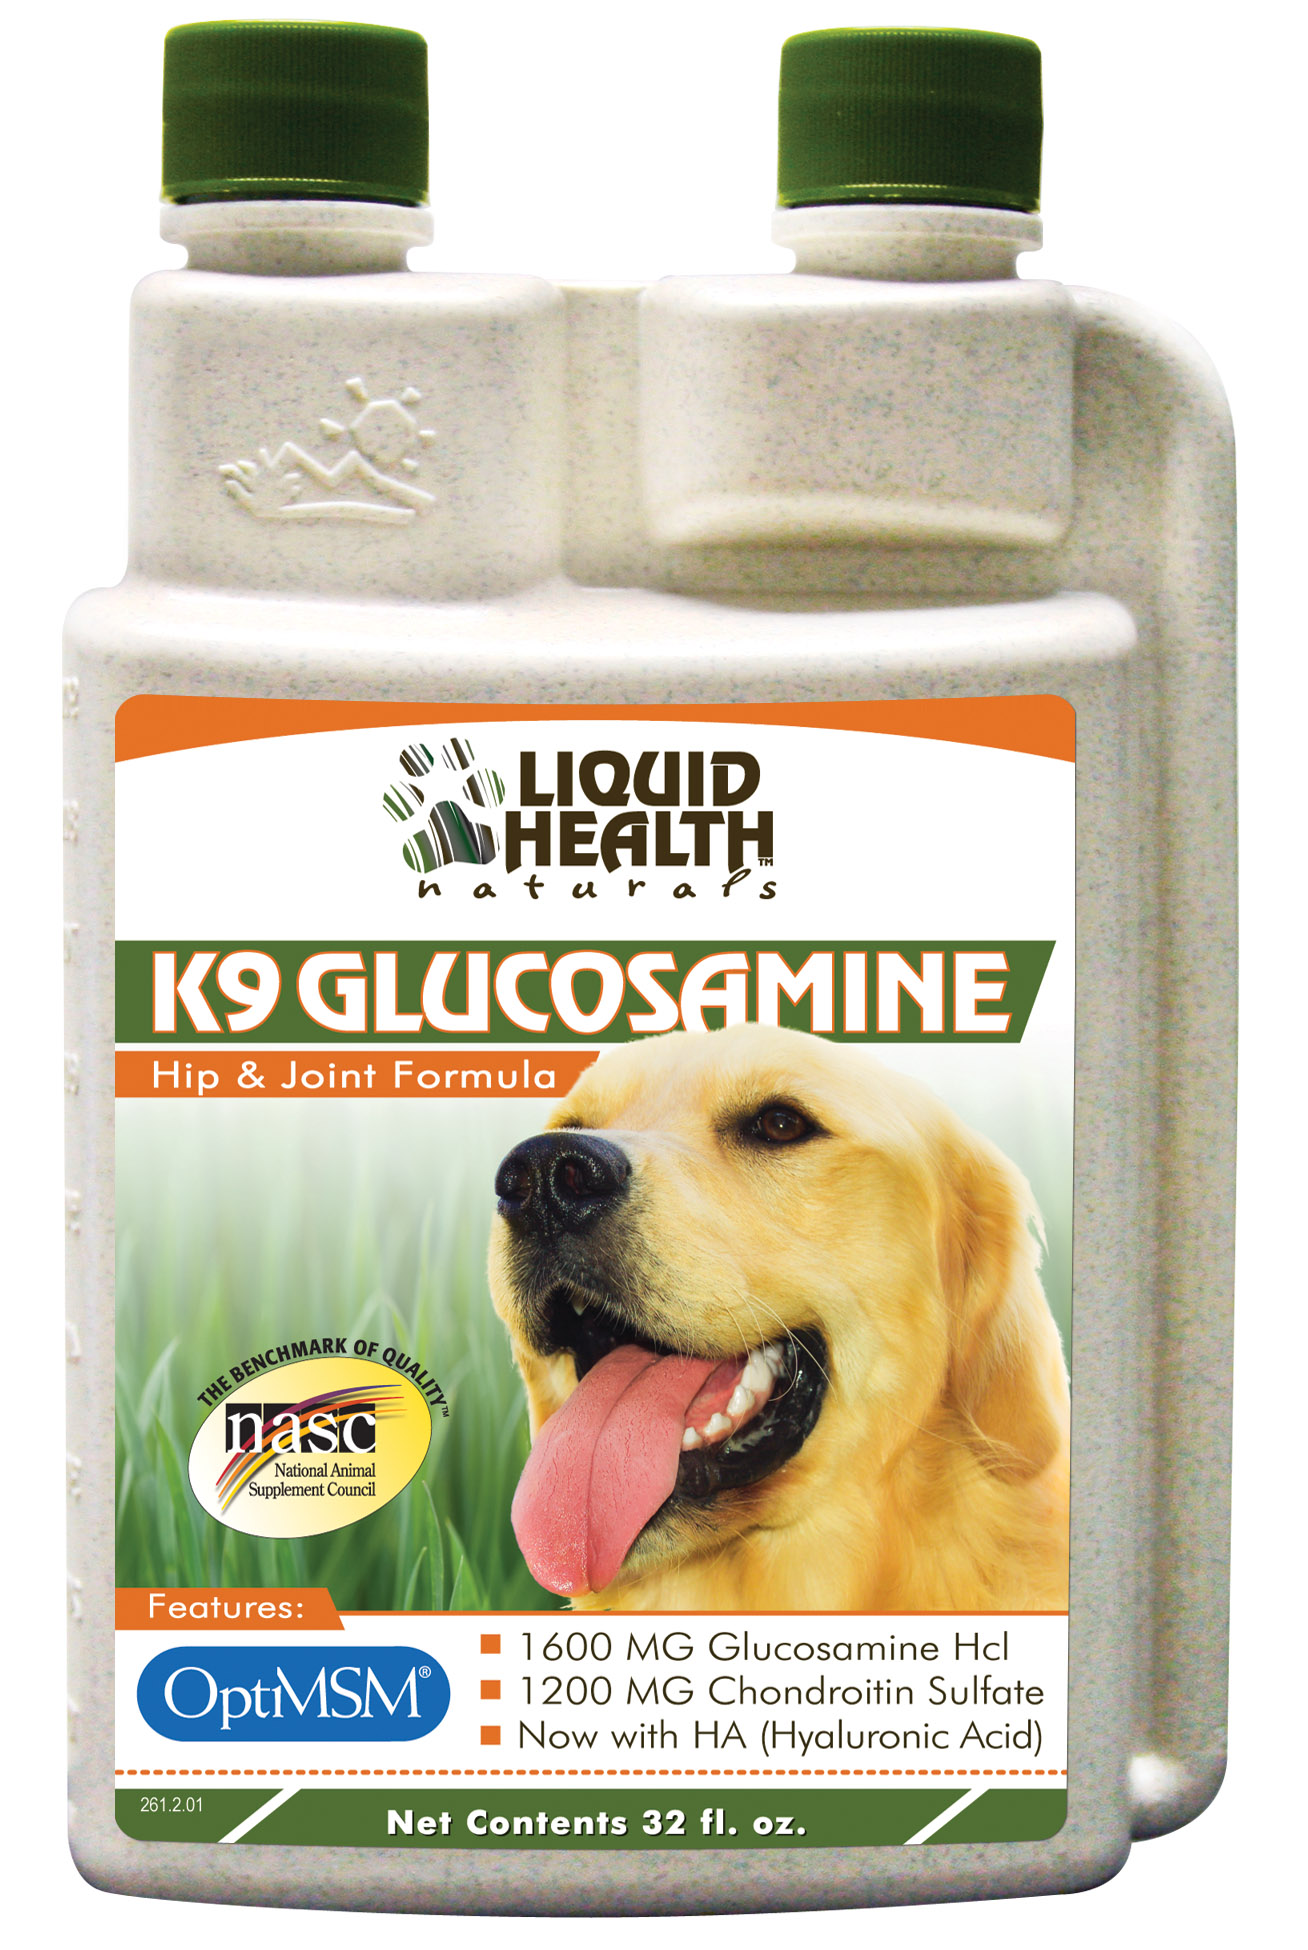 liquid glucosamine for dogs